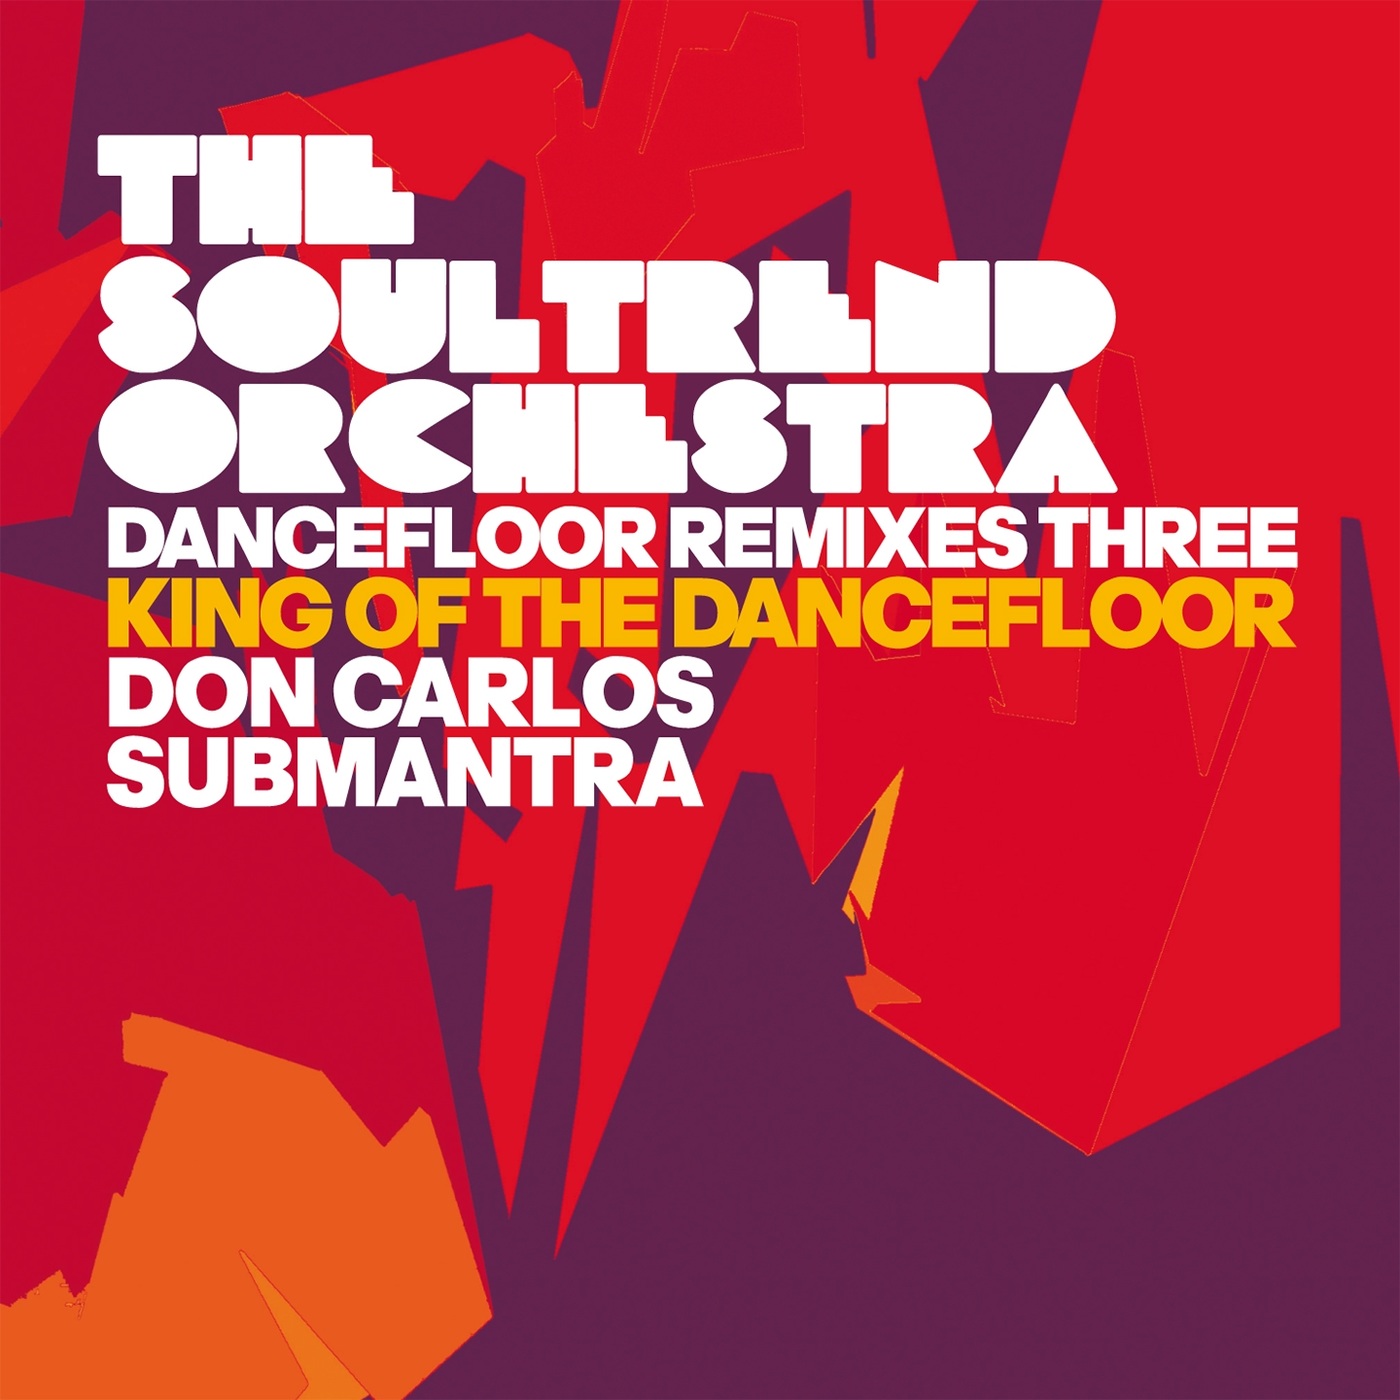 The Soultrend Orchestra - Dancefloor Remixes Three: King of the Dancefloor / Irma Dancefloor